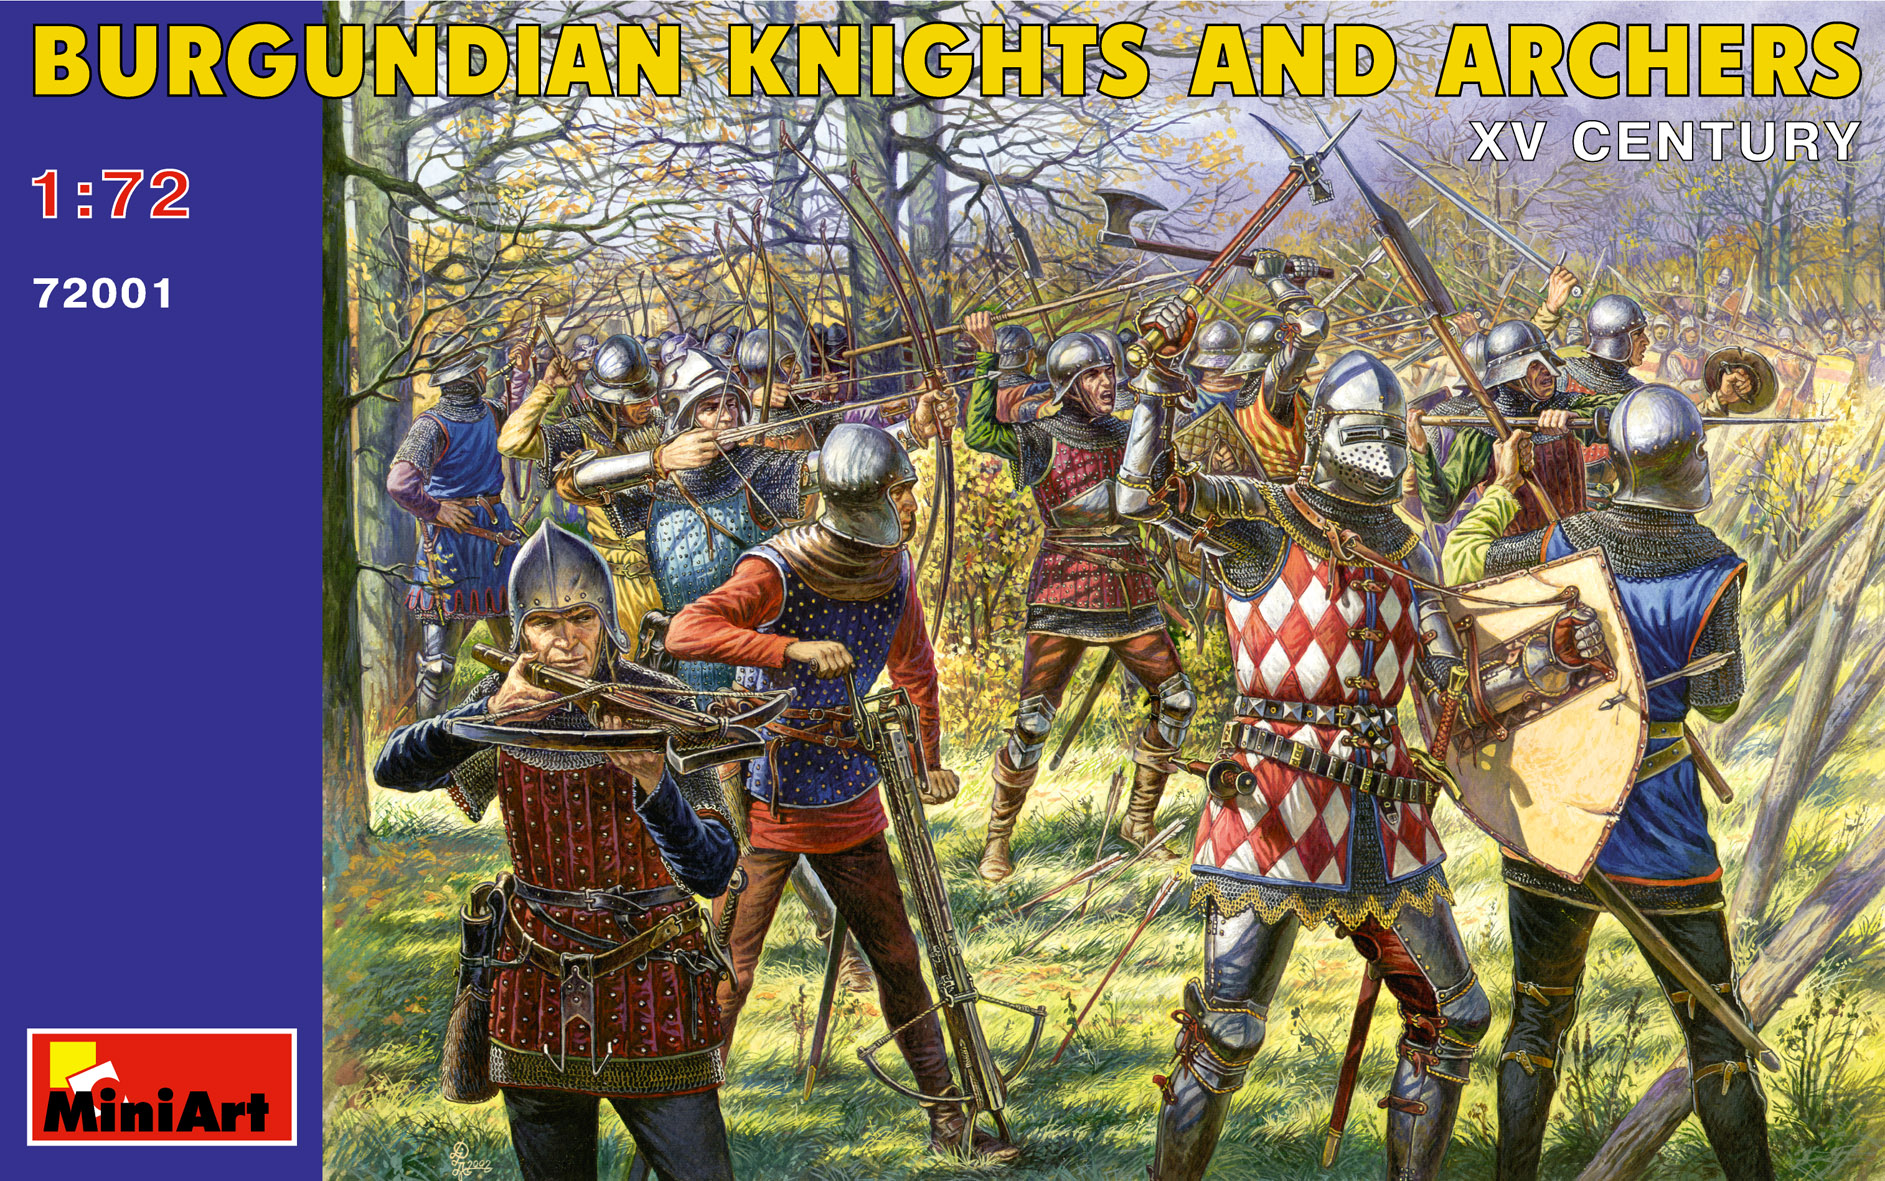 MINIART 1/72 Figure BURGUNDIAN KNIGHTS AND ARCHERS XV CENTUR